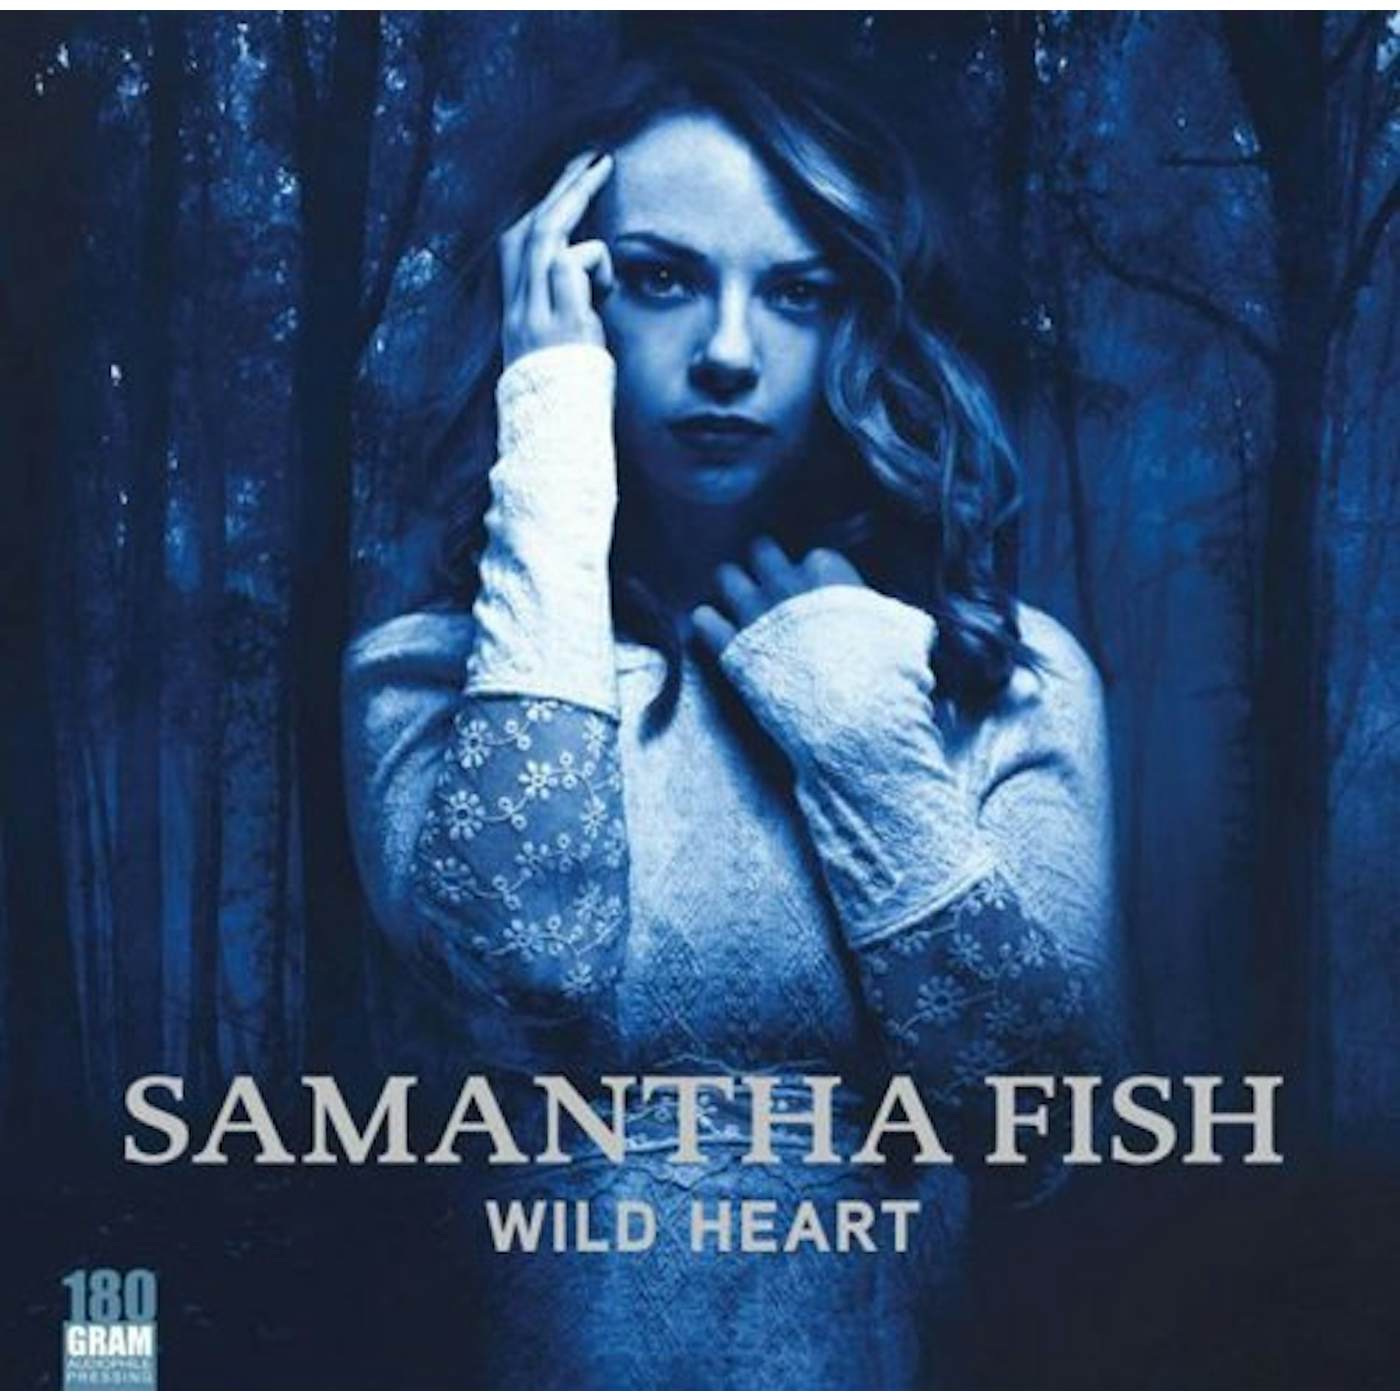 Samantha Fish Wild Heart Vinyl Record